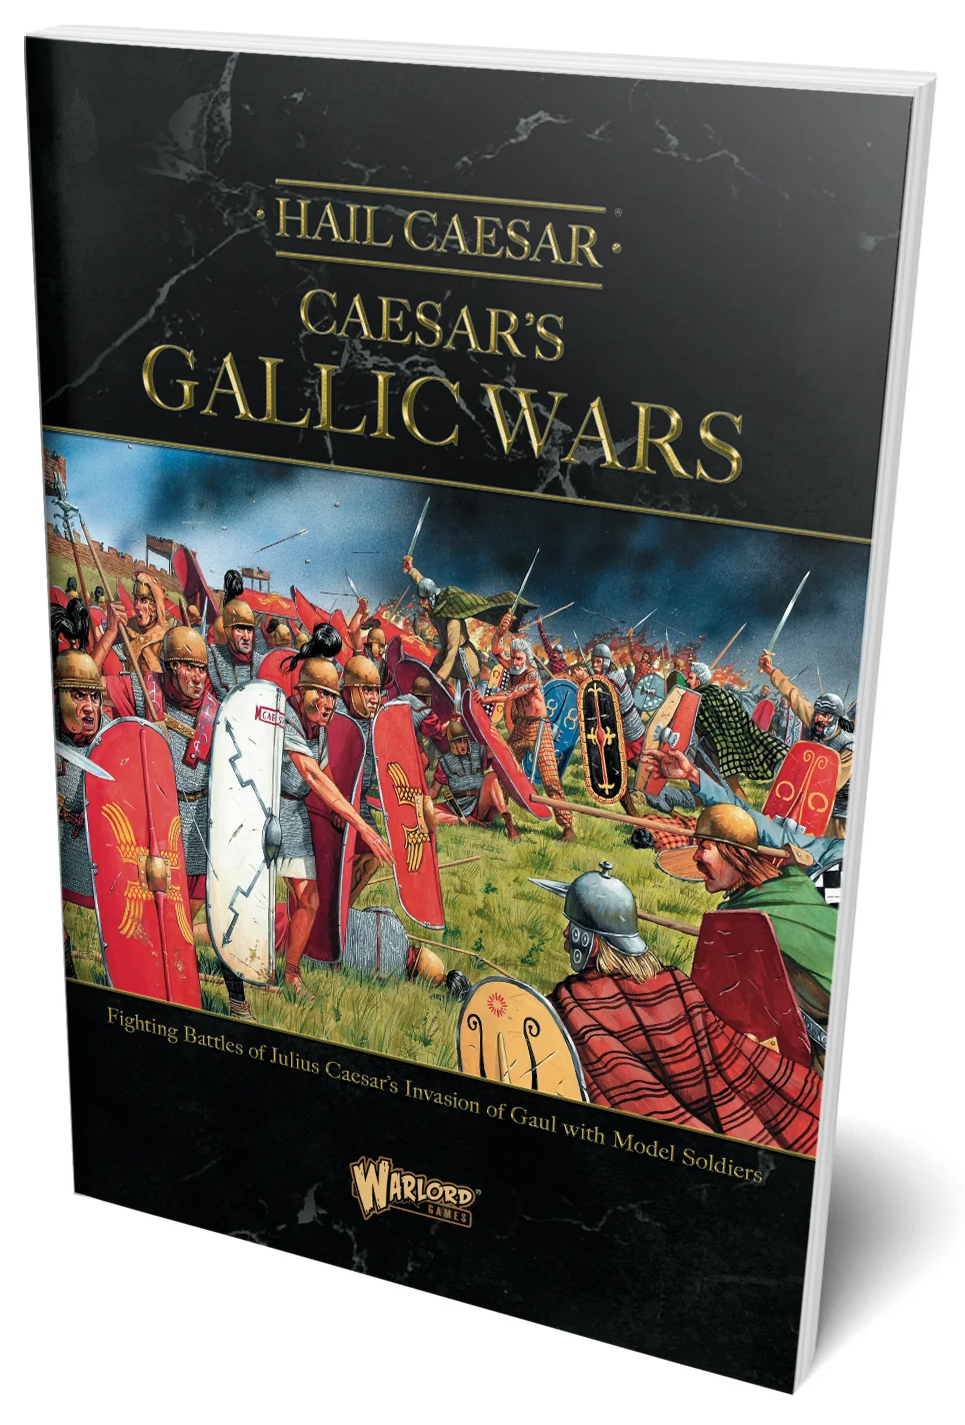 Hail Caesar: Caesars Gallic Wars (Book) 